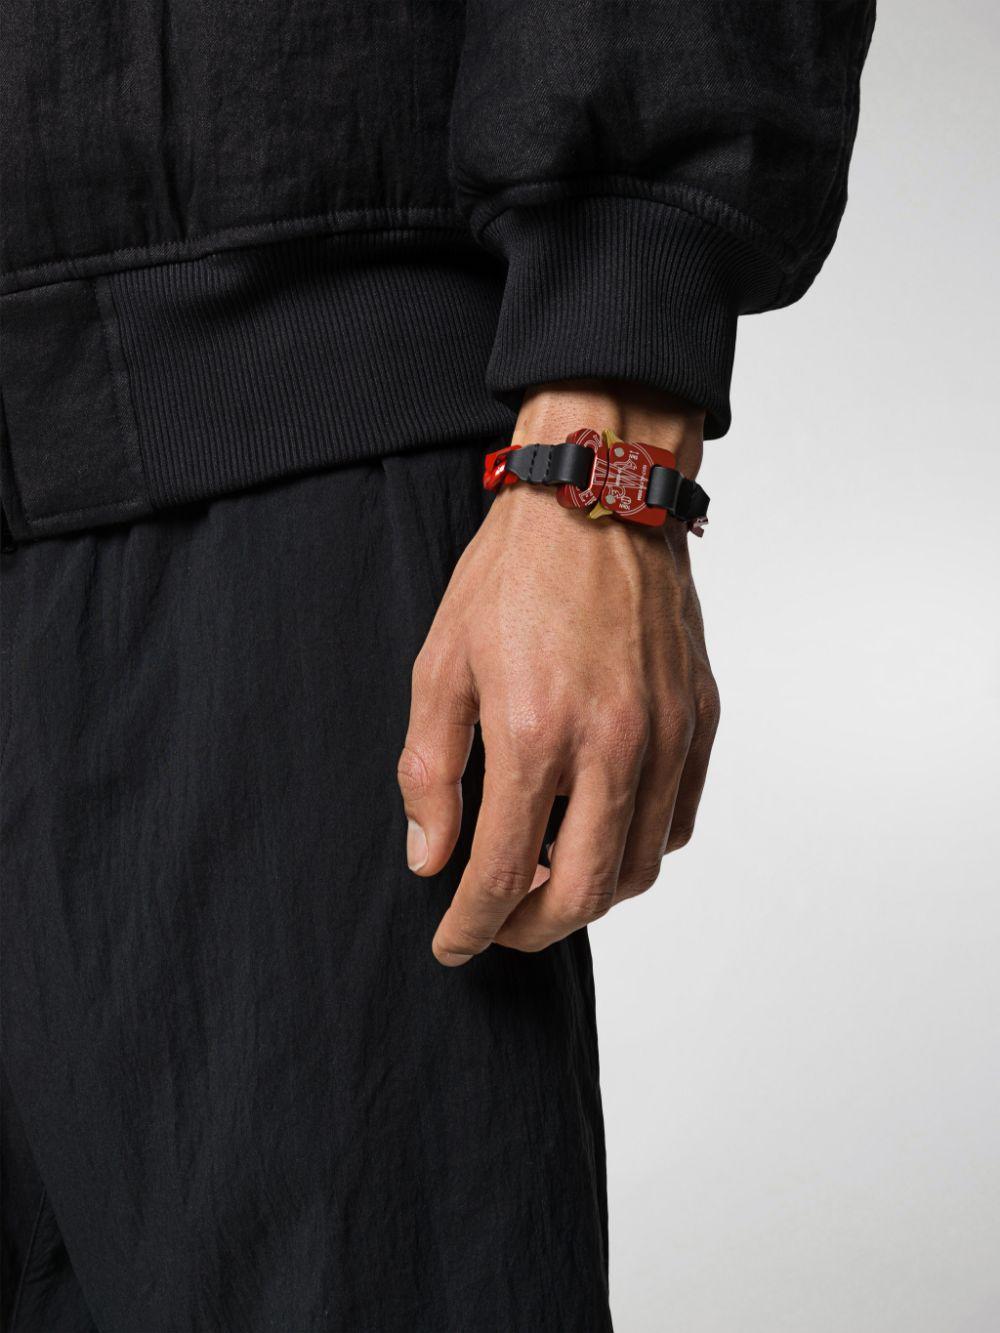 Moncler Genius Bracelet X 1017 Alyx 9sm in Red for Men | Lyst